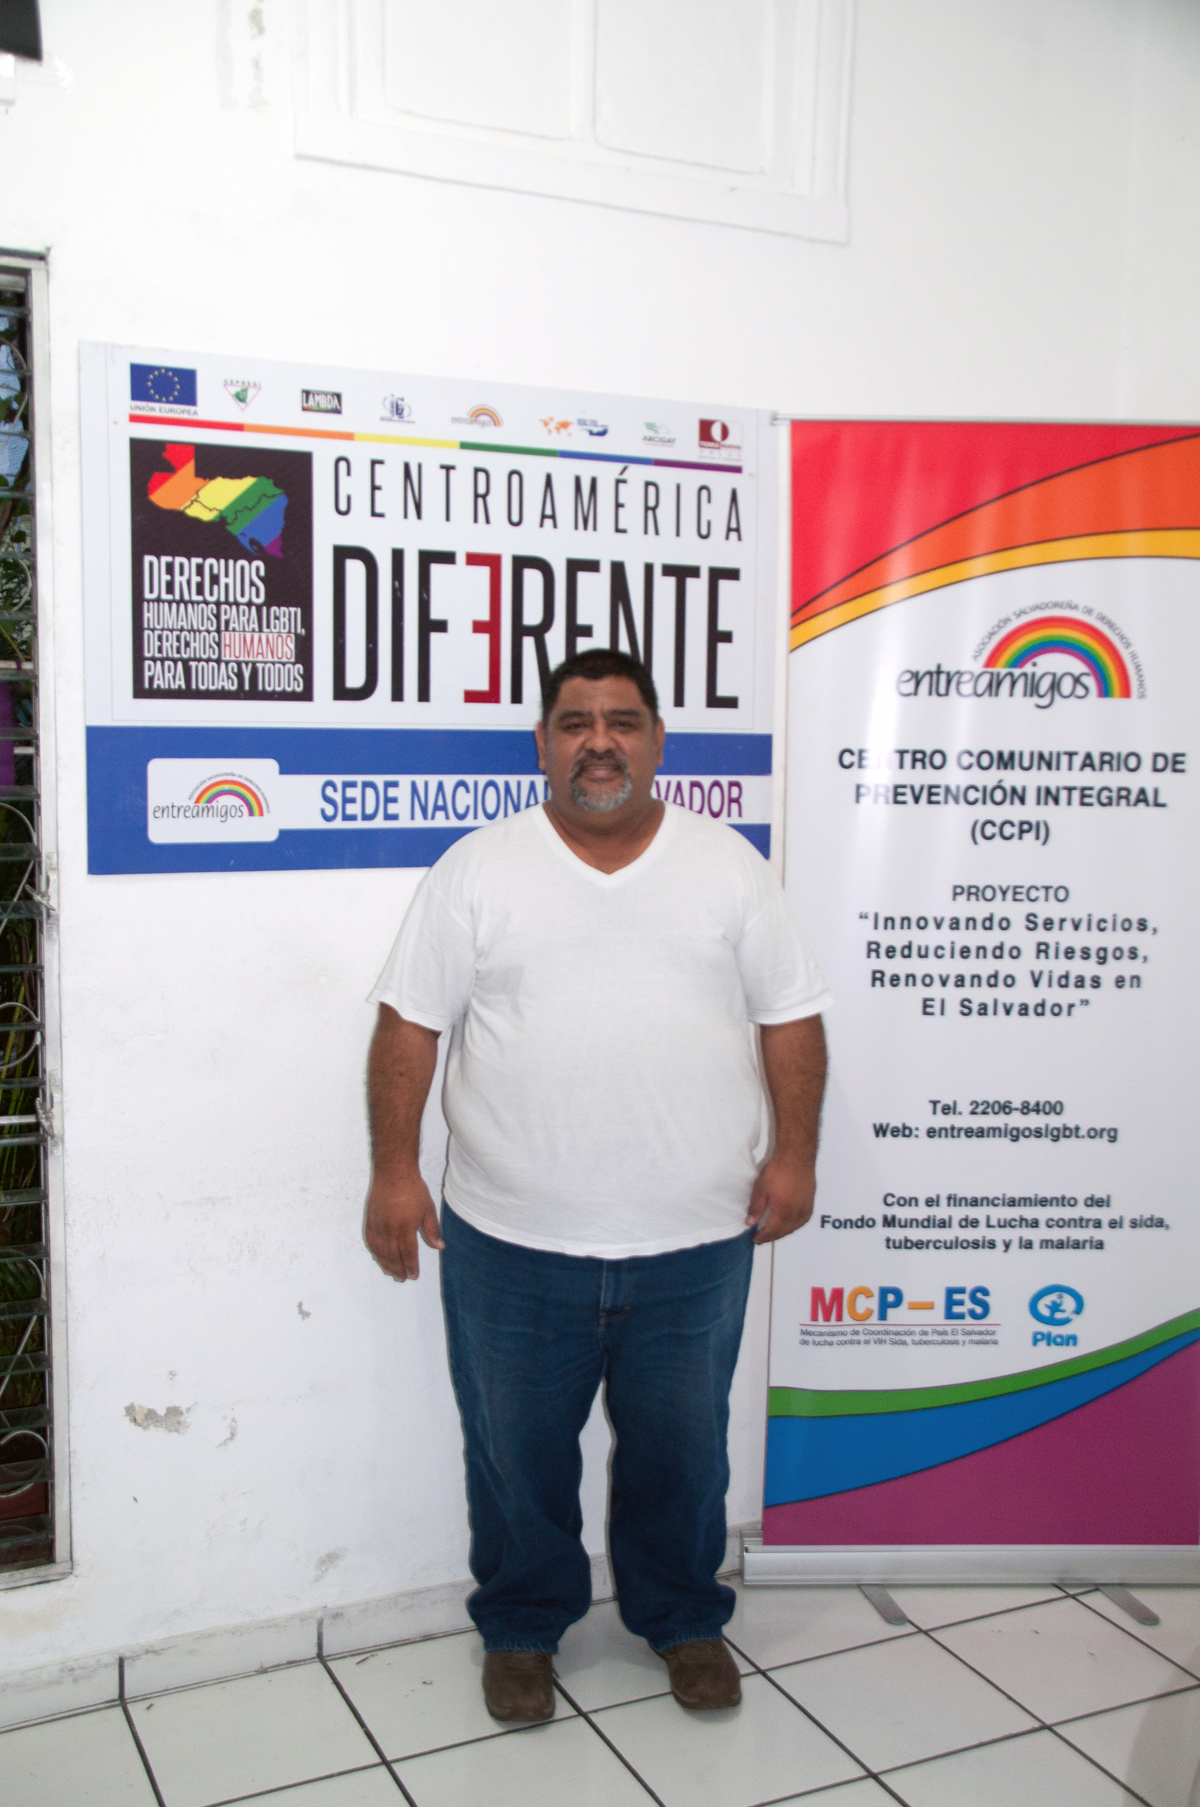 Founder and director of Entre Amigos, the LGBT organization in San Salvador.